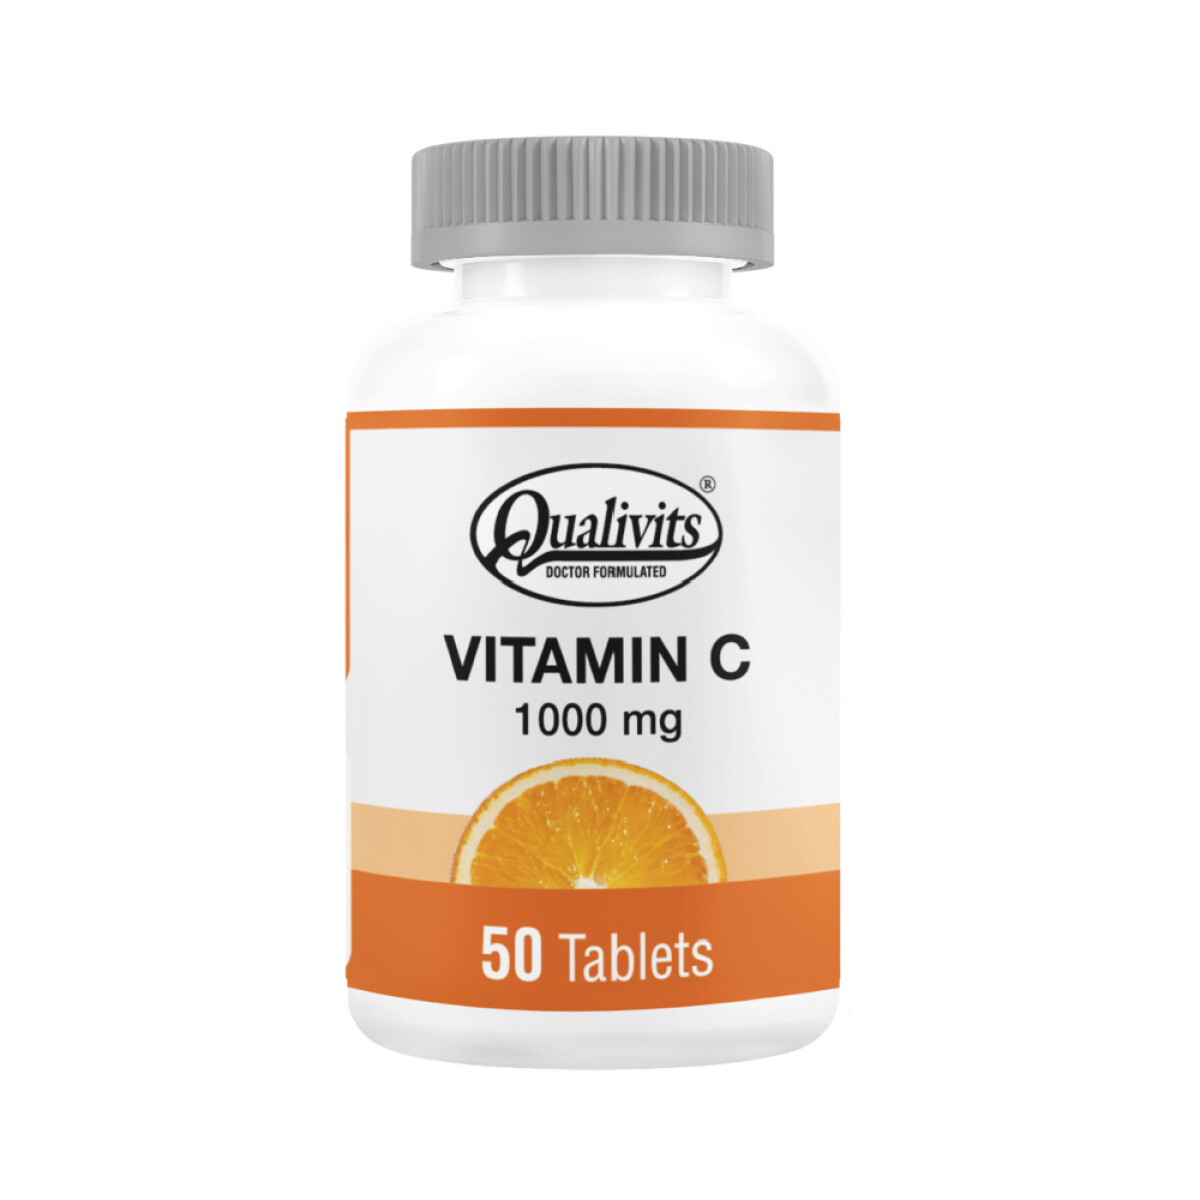 VITAMINA C QUALIVITS 1000 mg x 50 Tabletas 